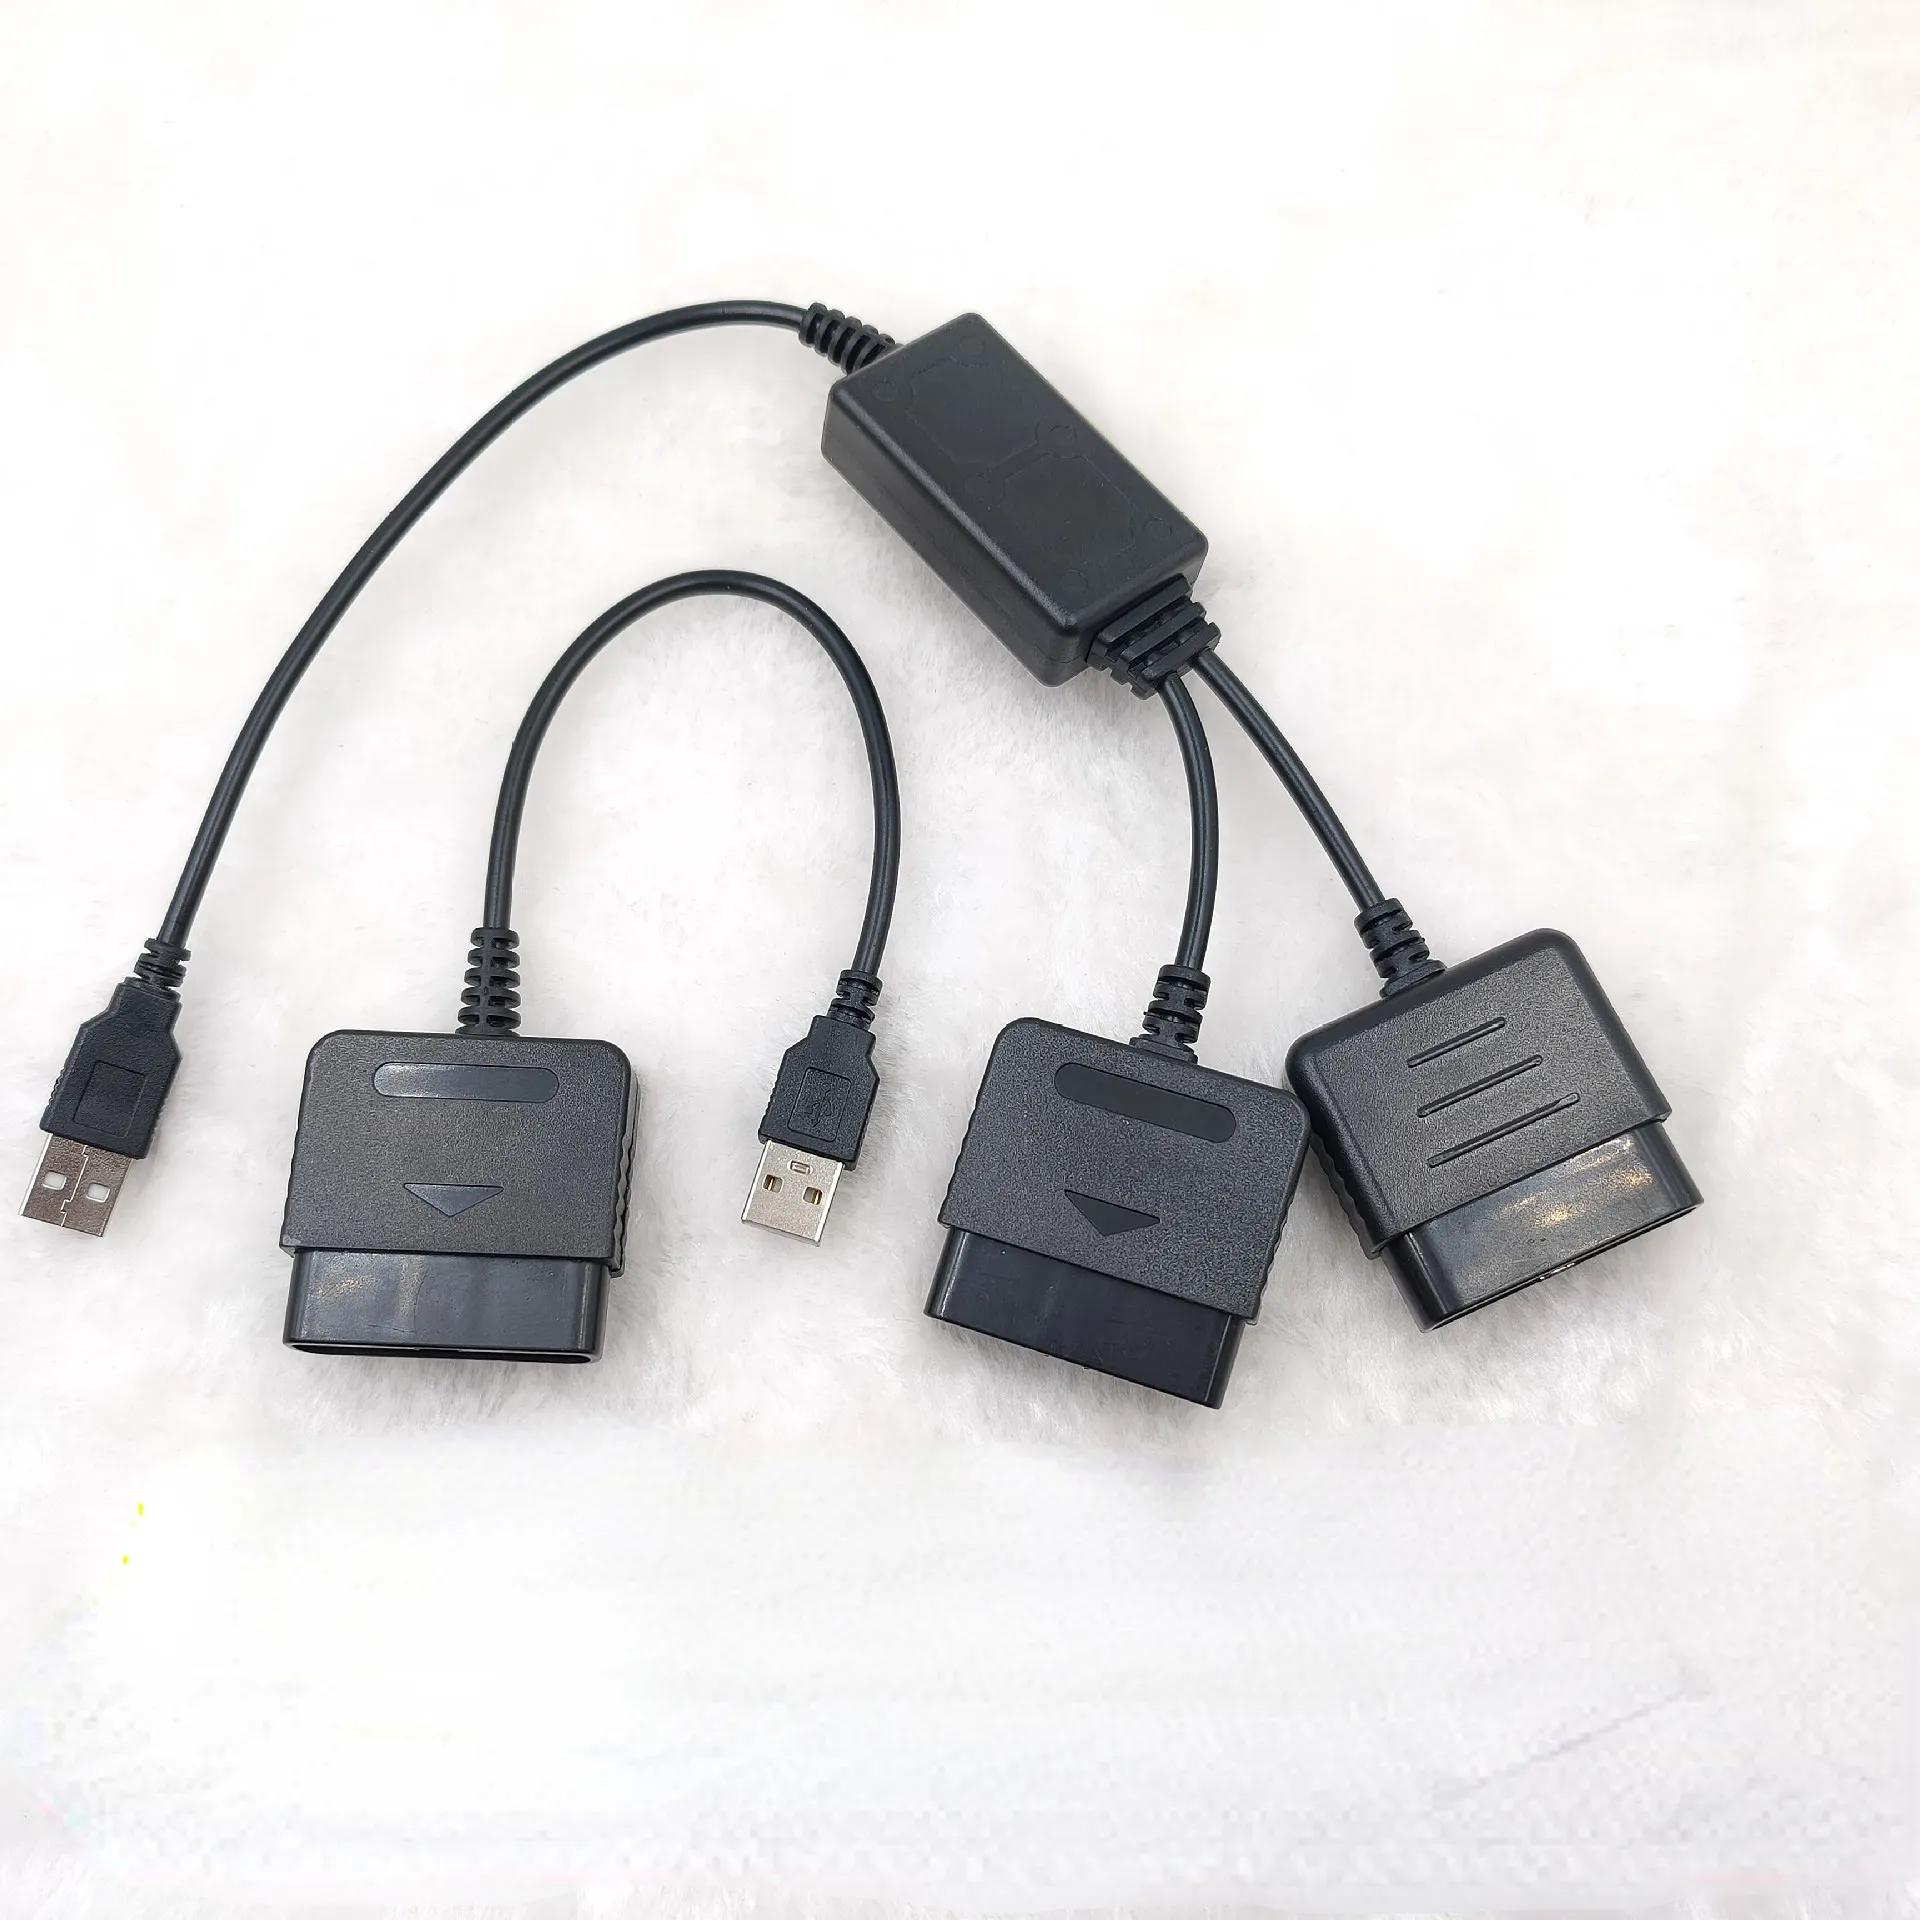 NSLikey PS2 контроллер USB адаптер конвертер кабель для PS3 и ПК